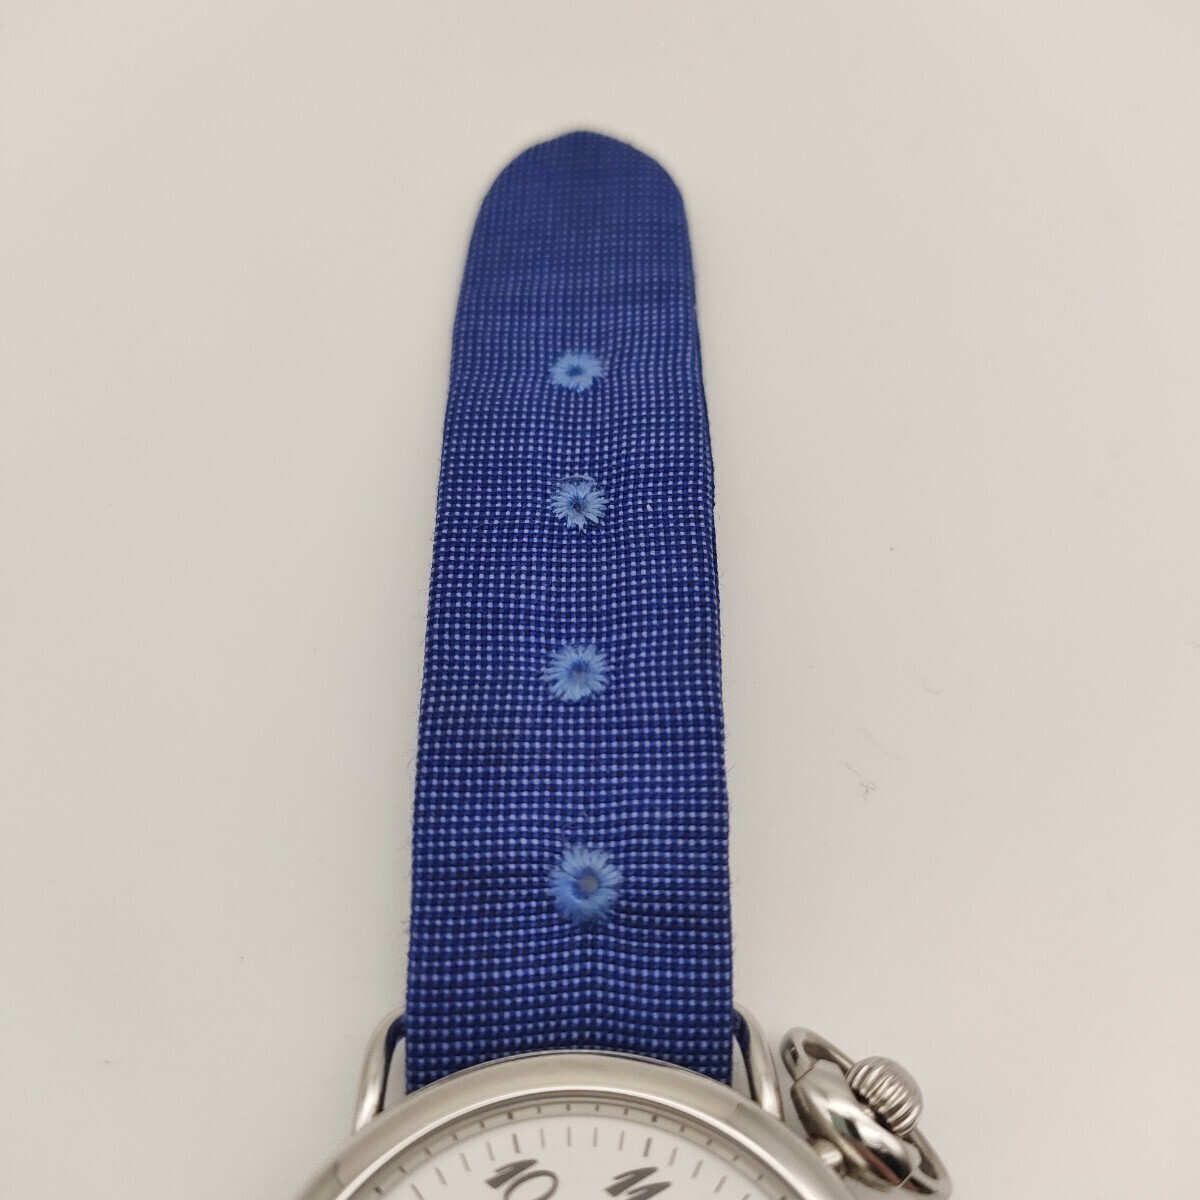 1 jpy operation goods CALABRITTO pocket watch wristwatch white face cloth belt analogue quartz 